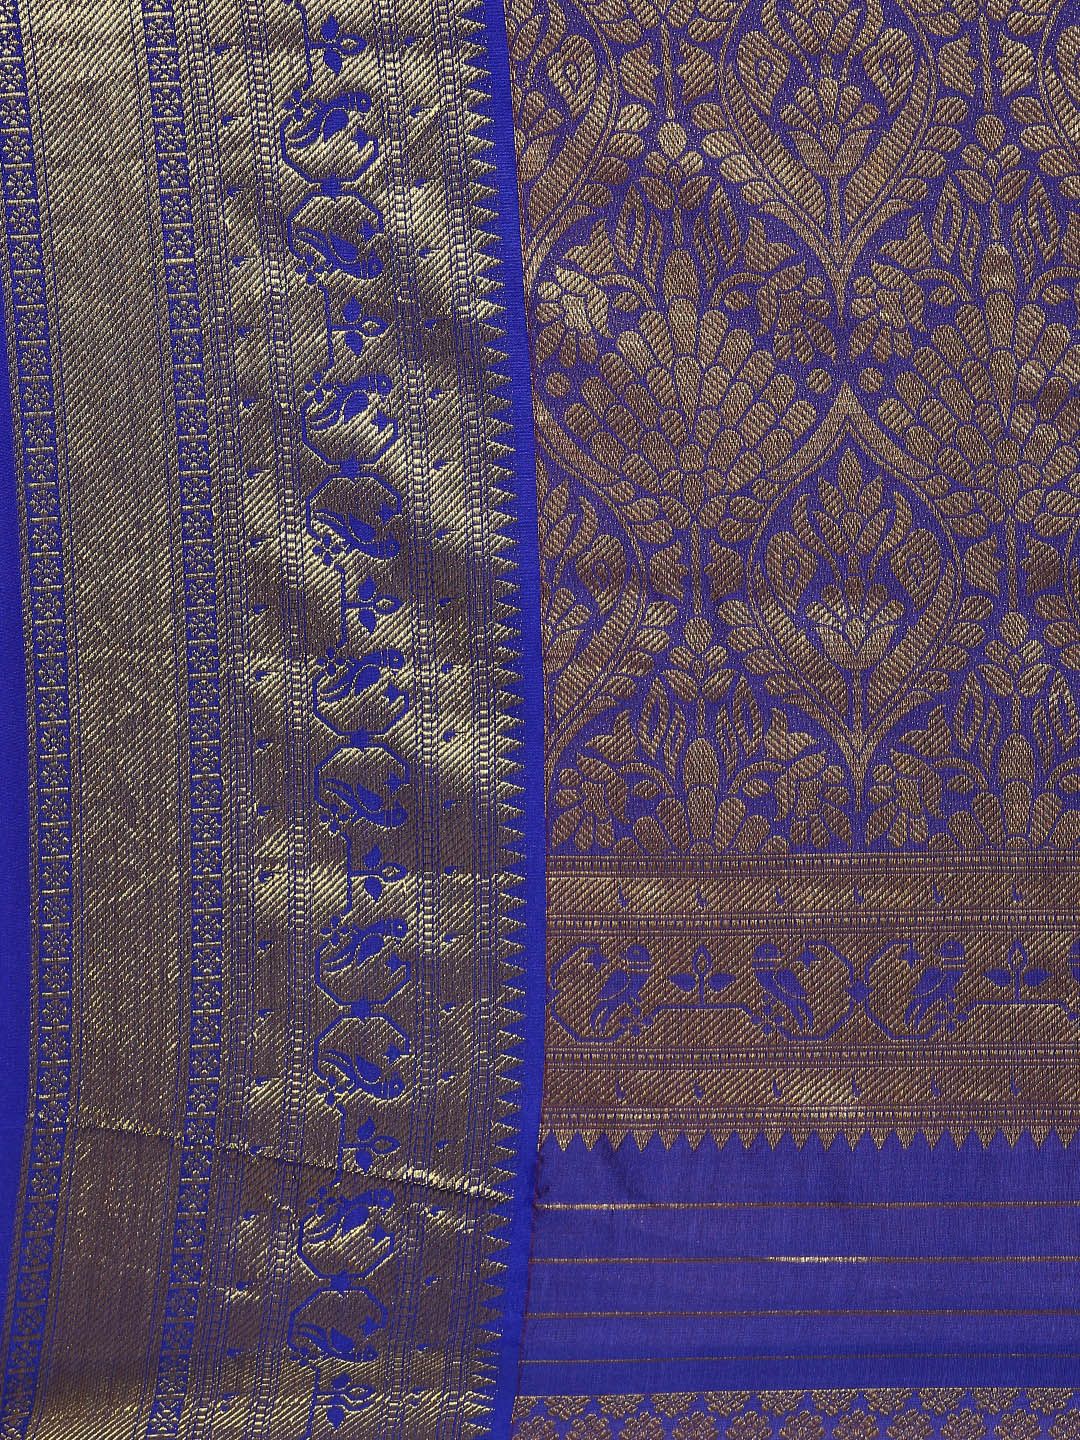 Purple Color South Pattu Silk Saree-Special South Festivel Collection